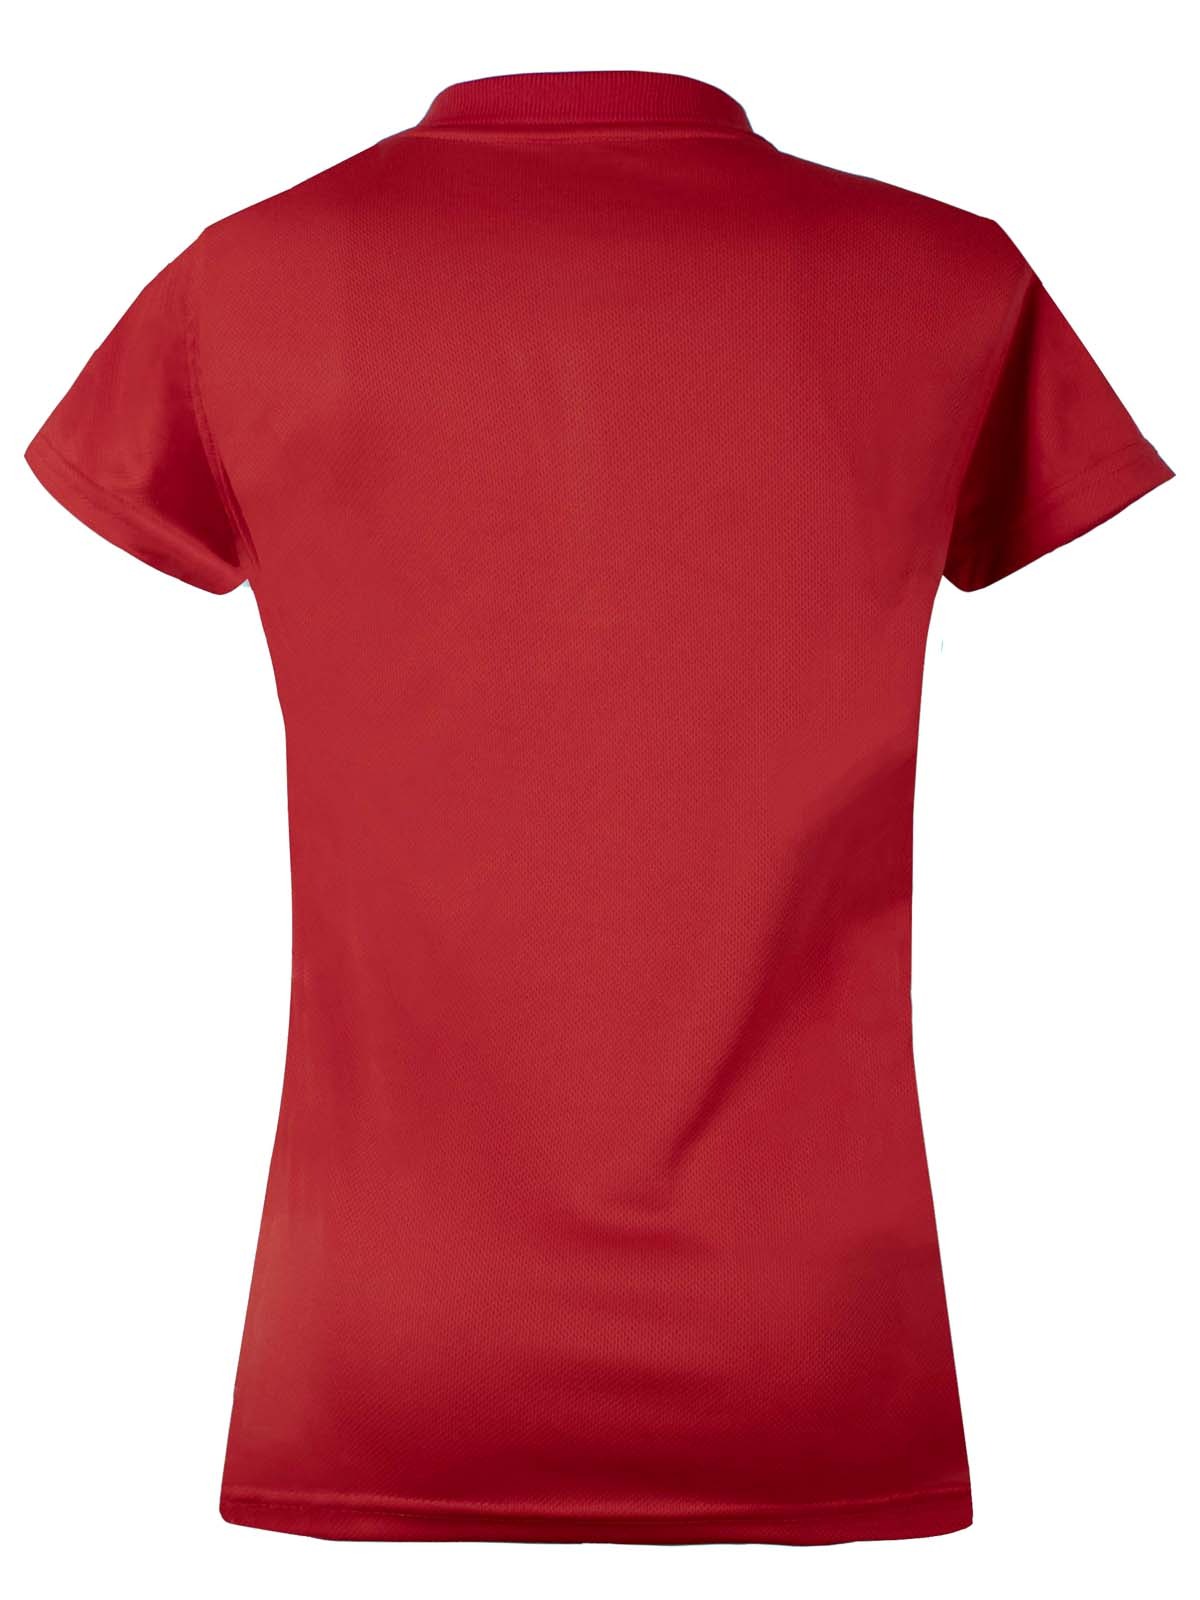 USA Polo Shirt Red Women 